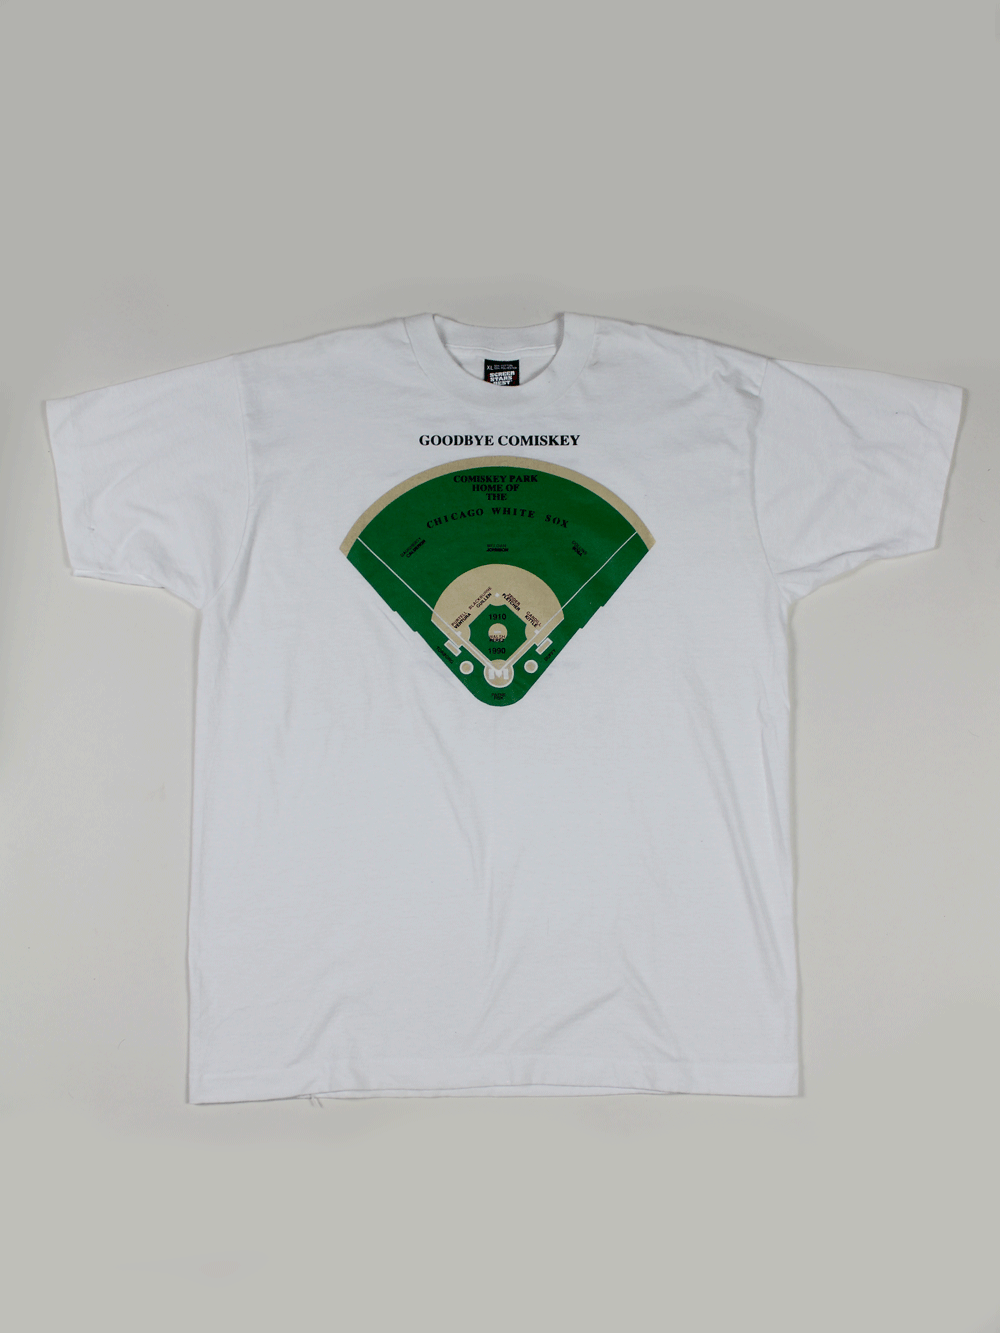 Vintage Baseball Shirt